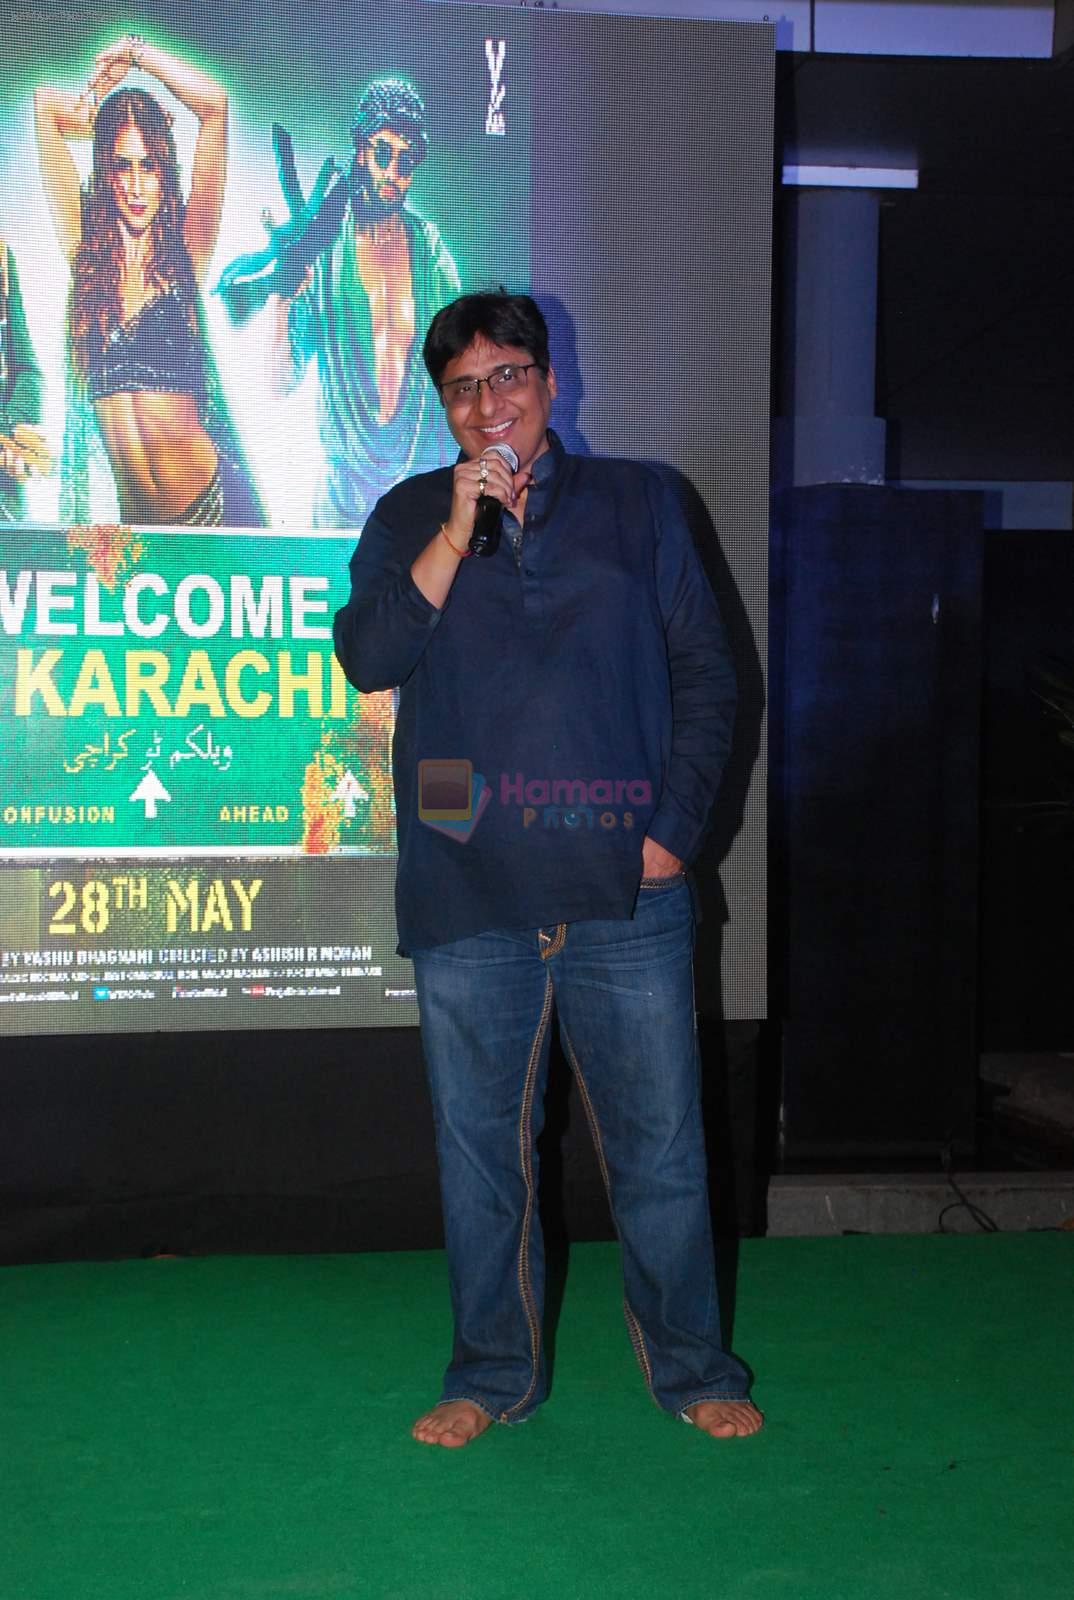 Vashu Bhagnani at Welcome 2 Karachi music promotions in Juhu, Mumbai on 21st May 2015